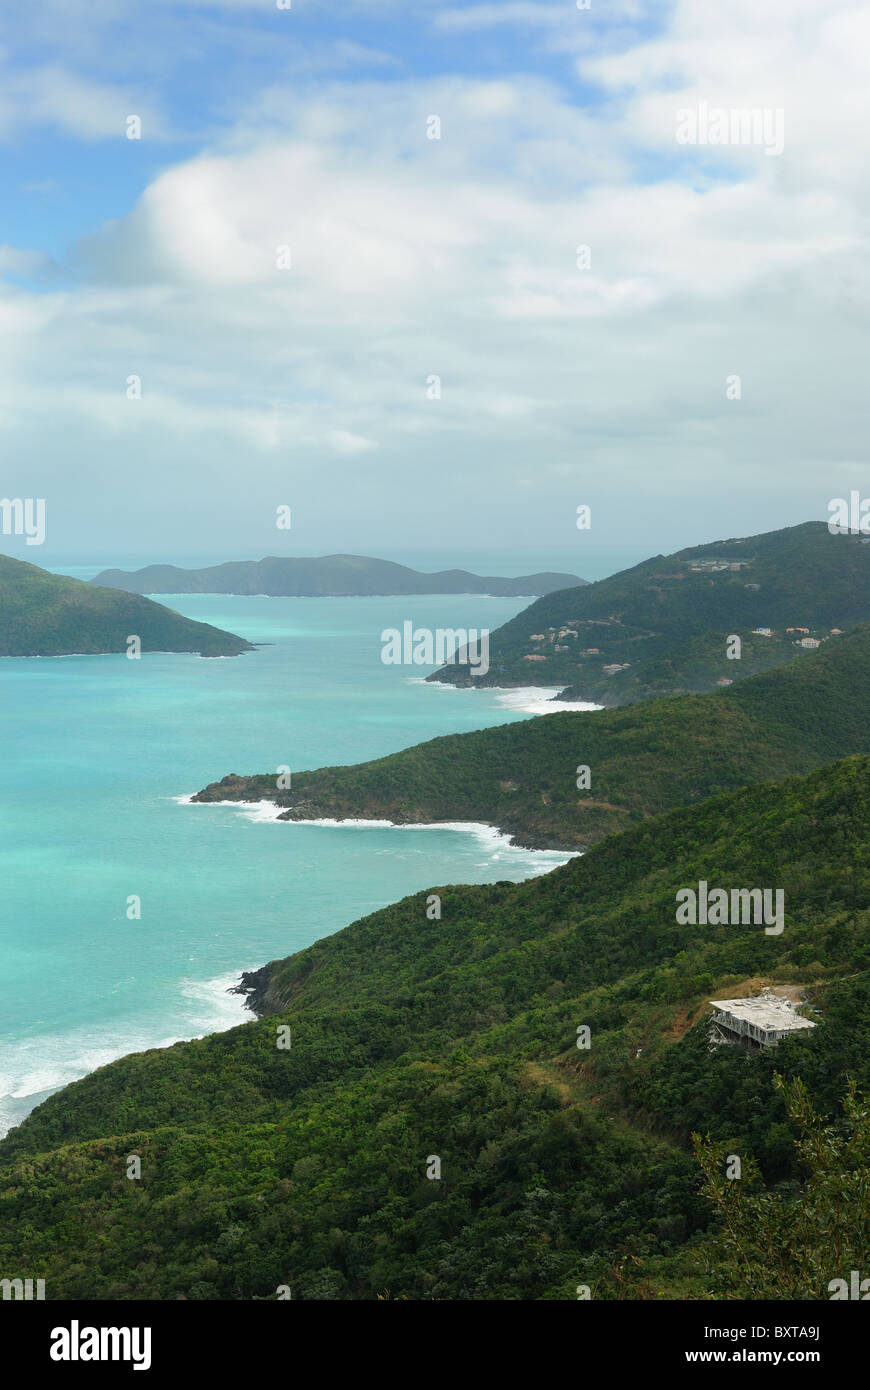 Tropical landscape in Tortola, a Caribbean island. Stock Photo